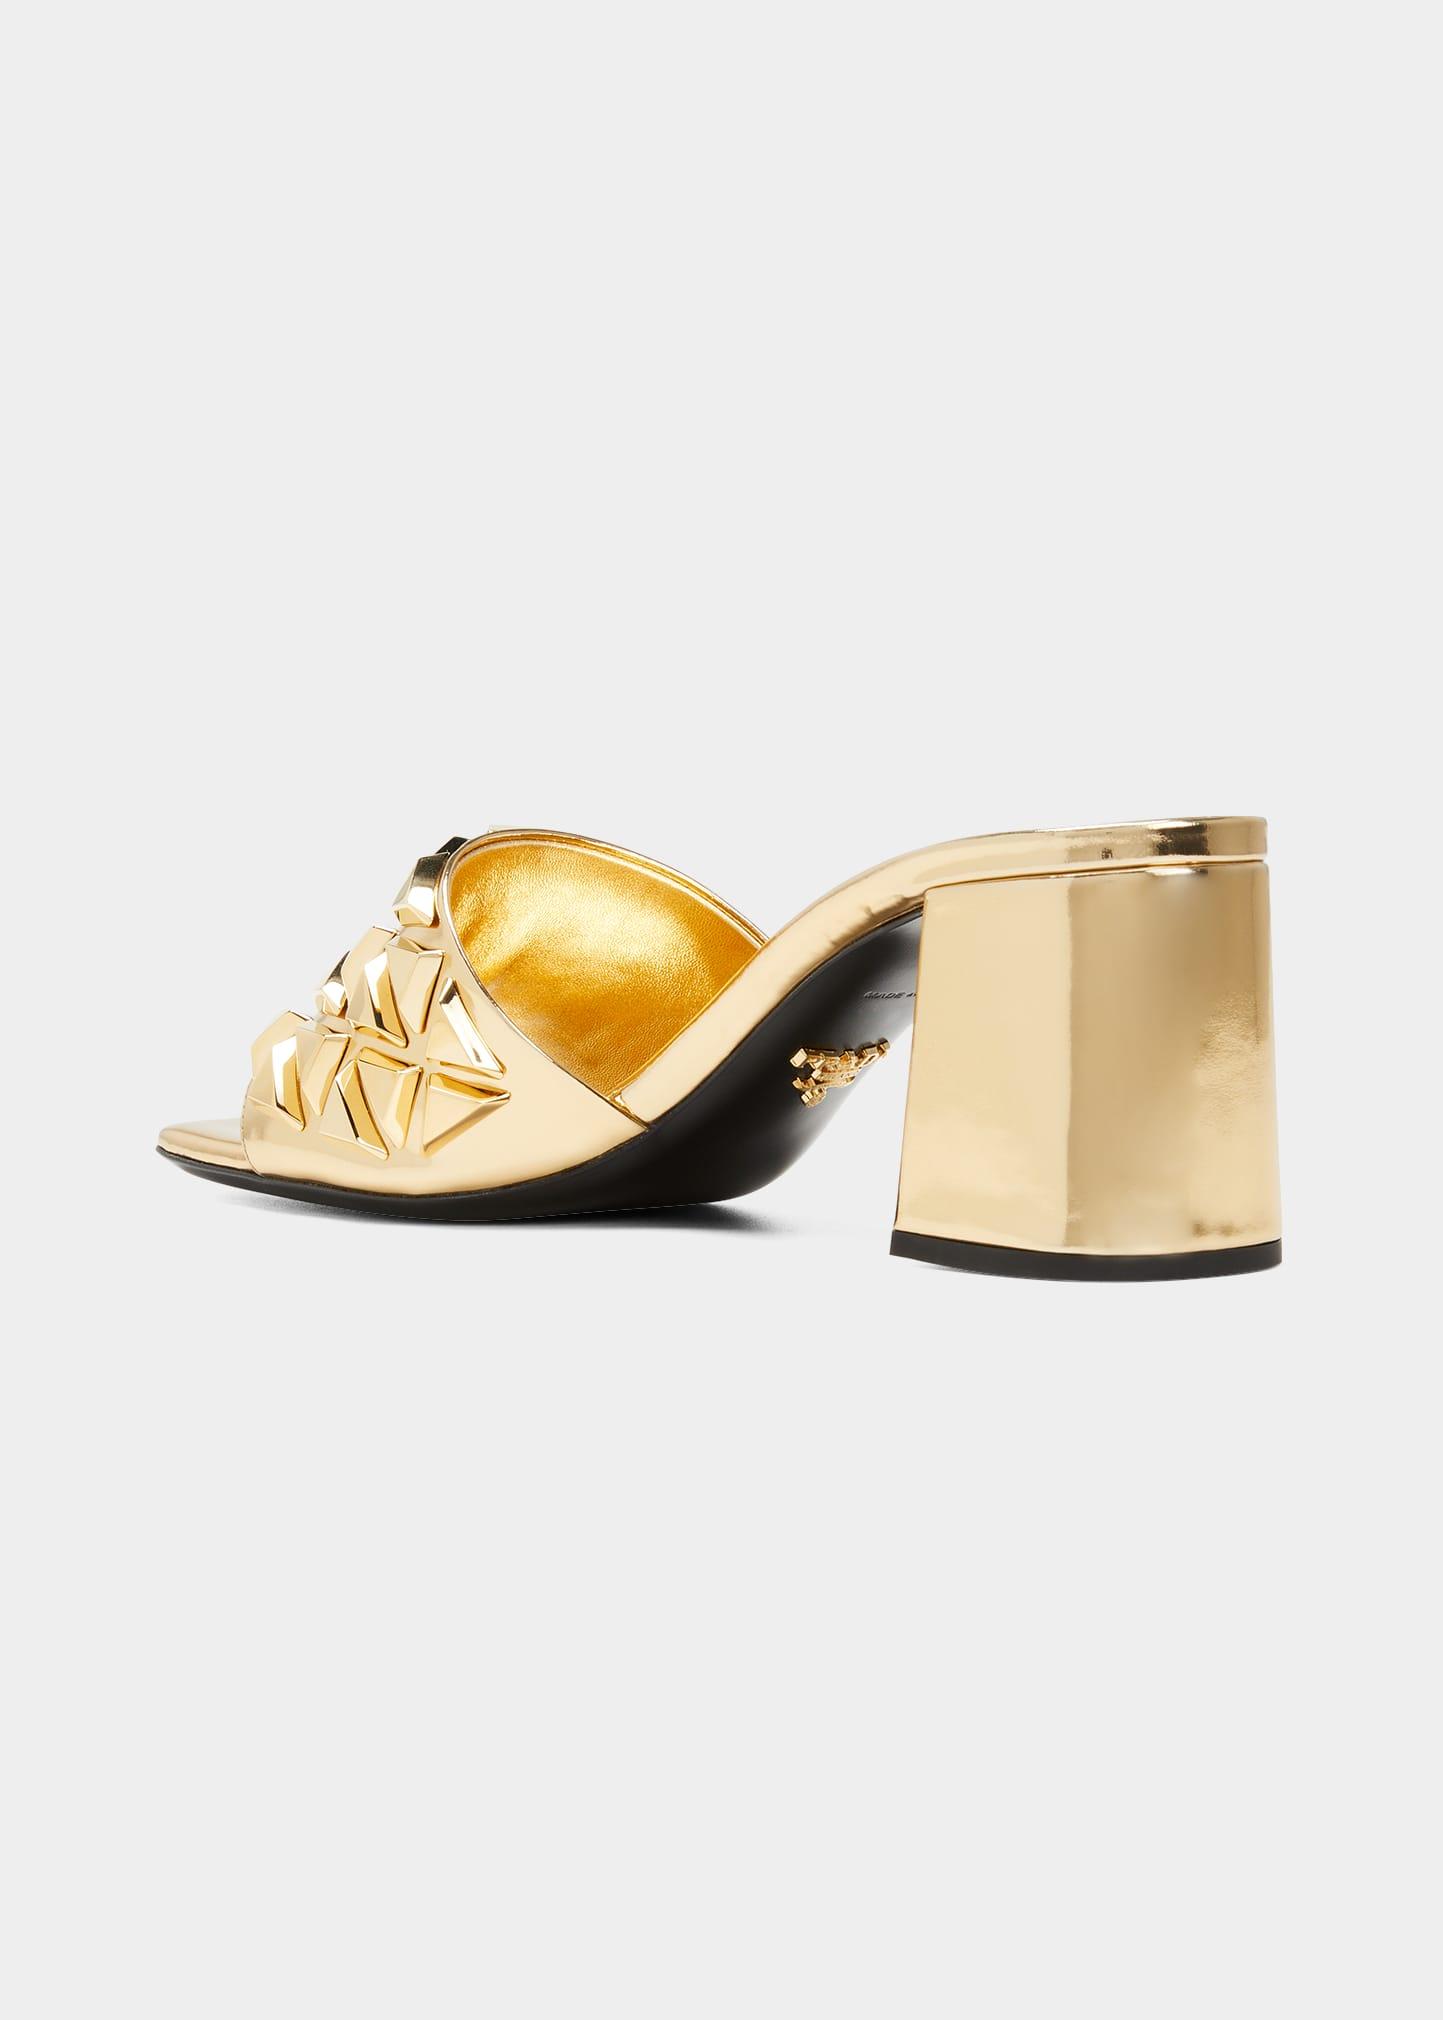 Prada Ciabatte Spazzolato Borchie Sandals in Metallic | Lyst